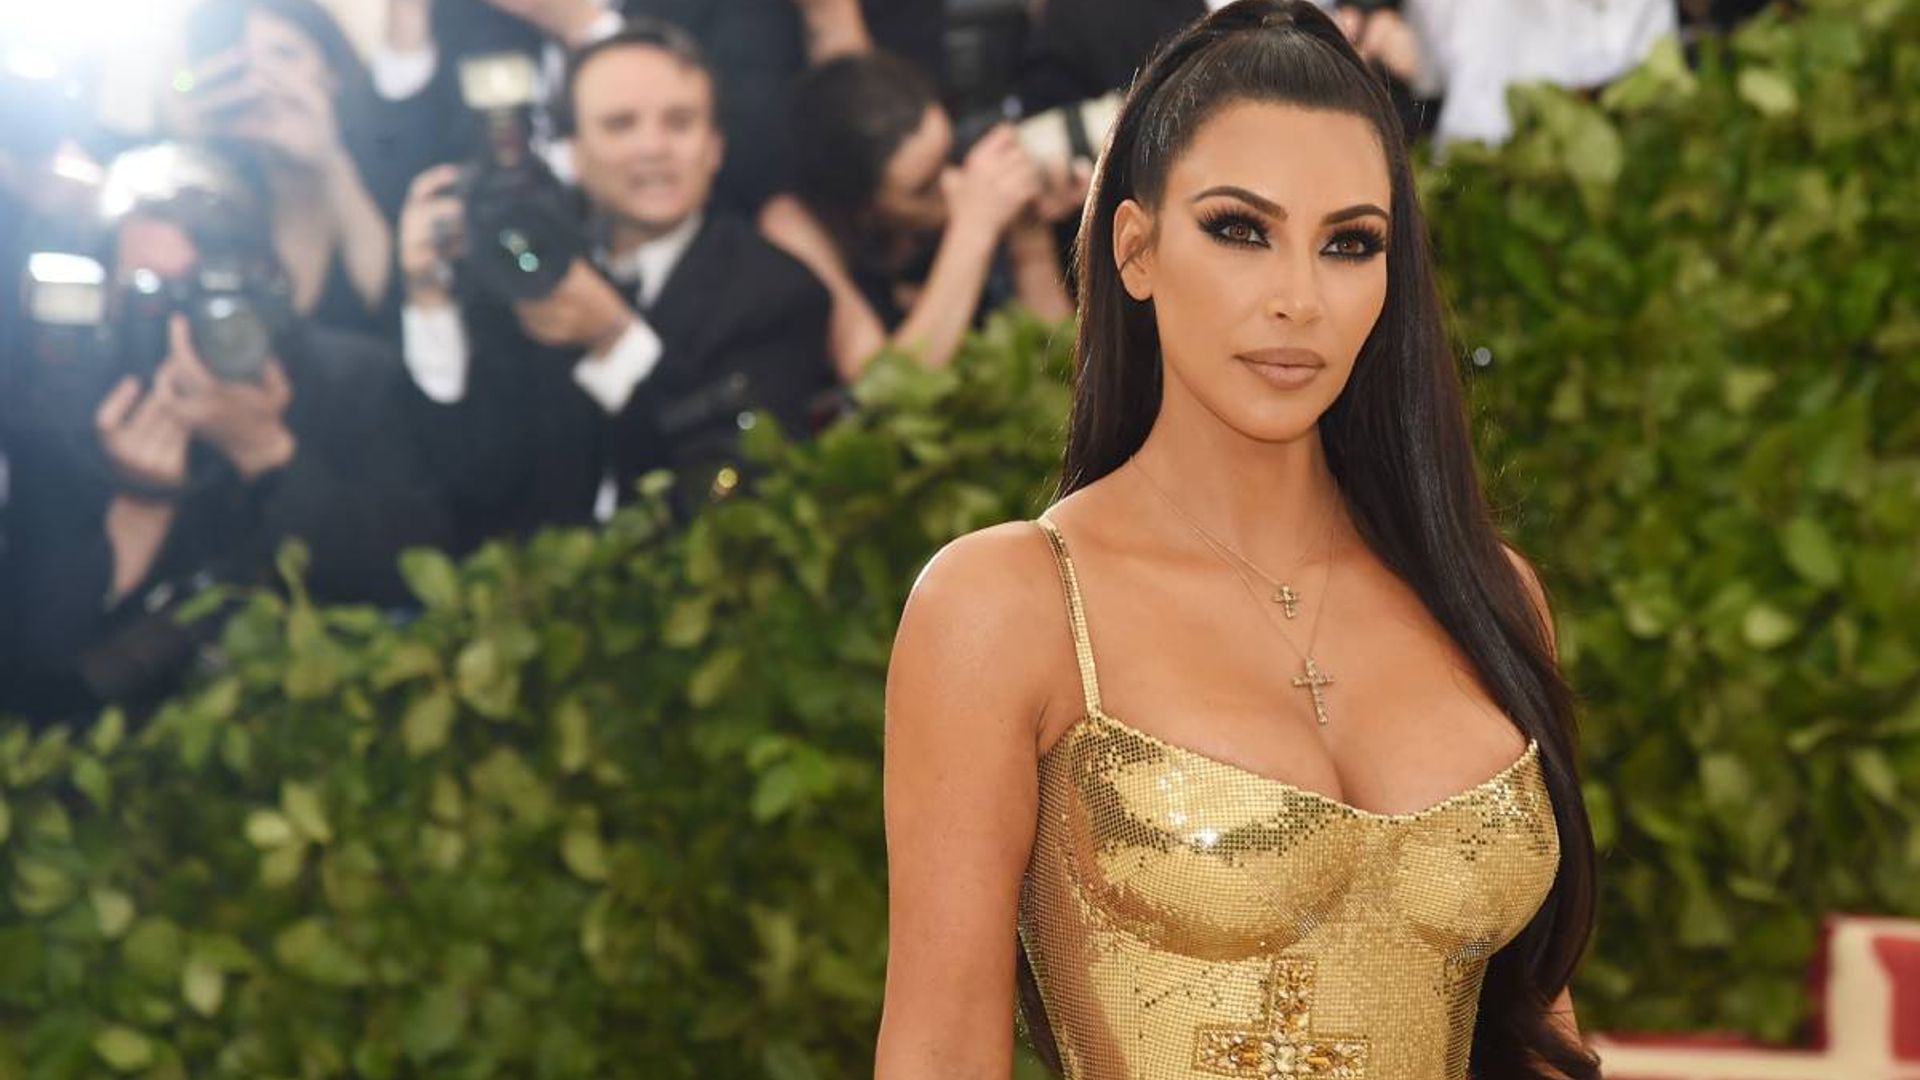 Kim Kardashian's SKIMS is launching a new sleepwear range this